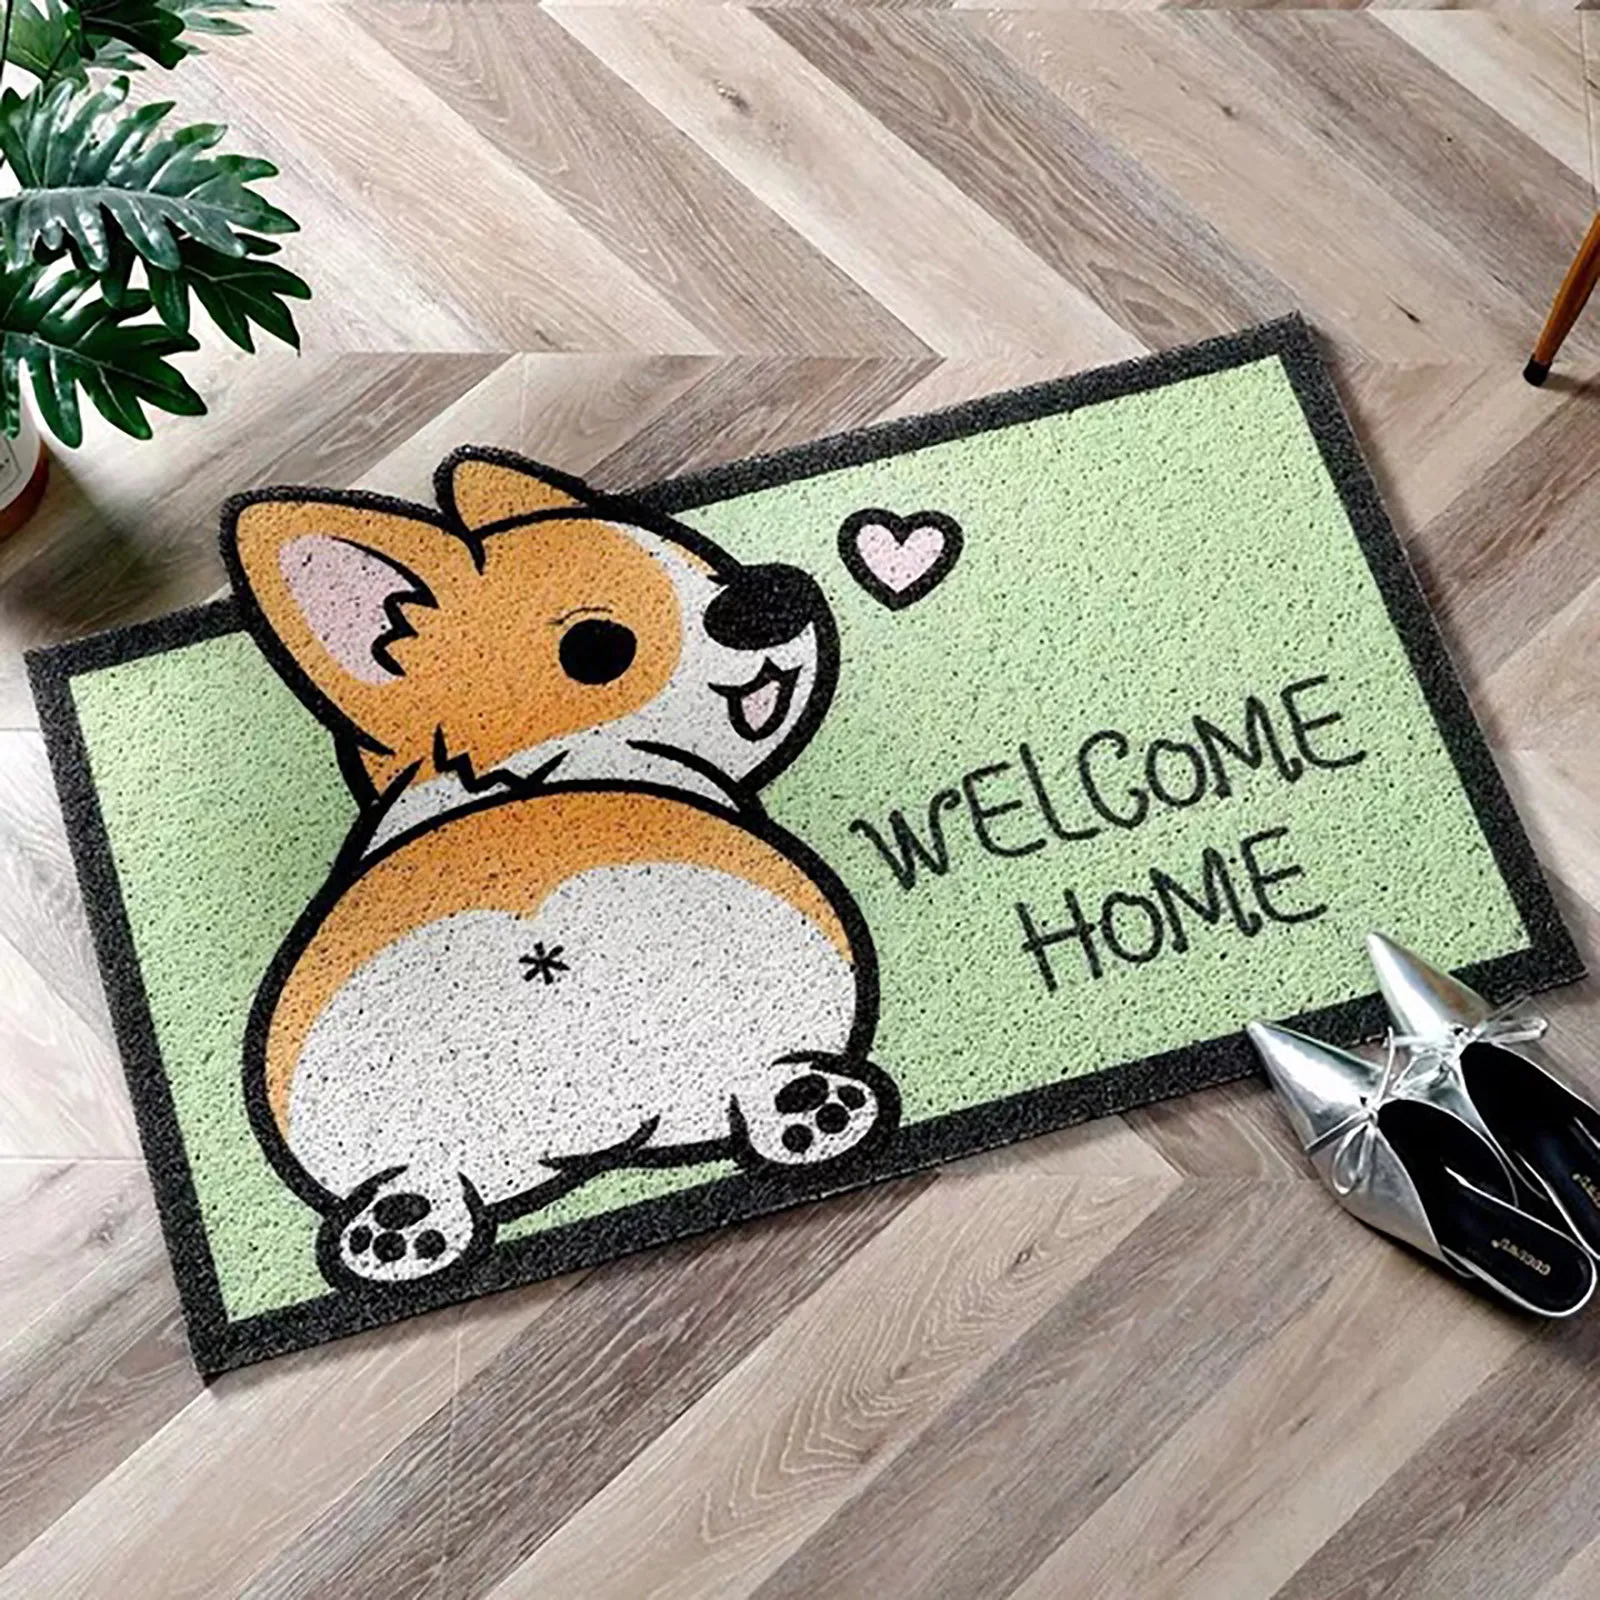 https://ae01.alicdn.com/kf/H0fcfa0661c974aa9a3cf22786725080fa/Cute-MINI-Corgi-Dog-Doormat-Decor-Pet-Animal-Floor-Door-Mat-Non-Slip-Soft-Flannel-Carpet.jpg